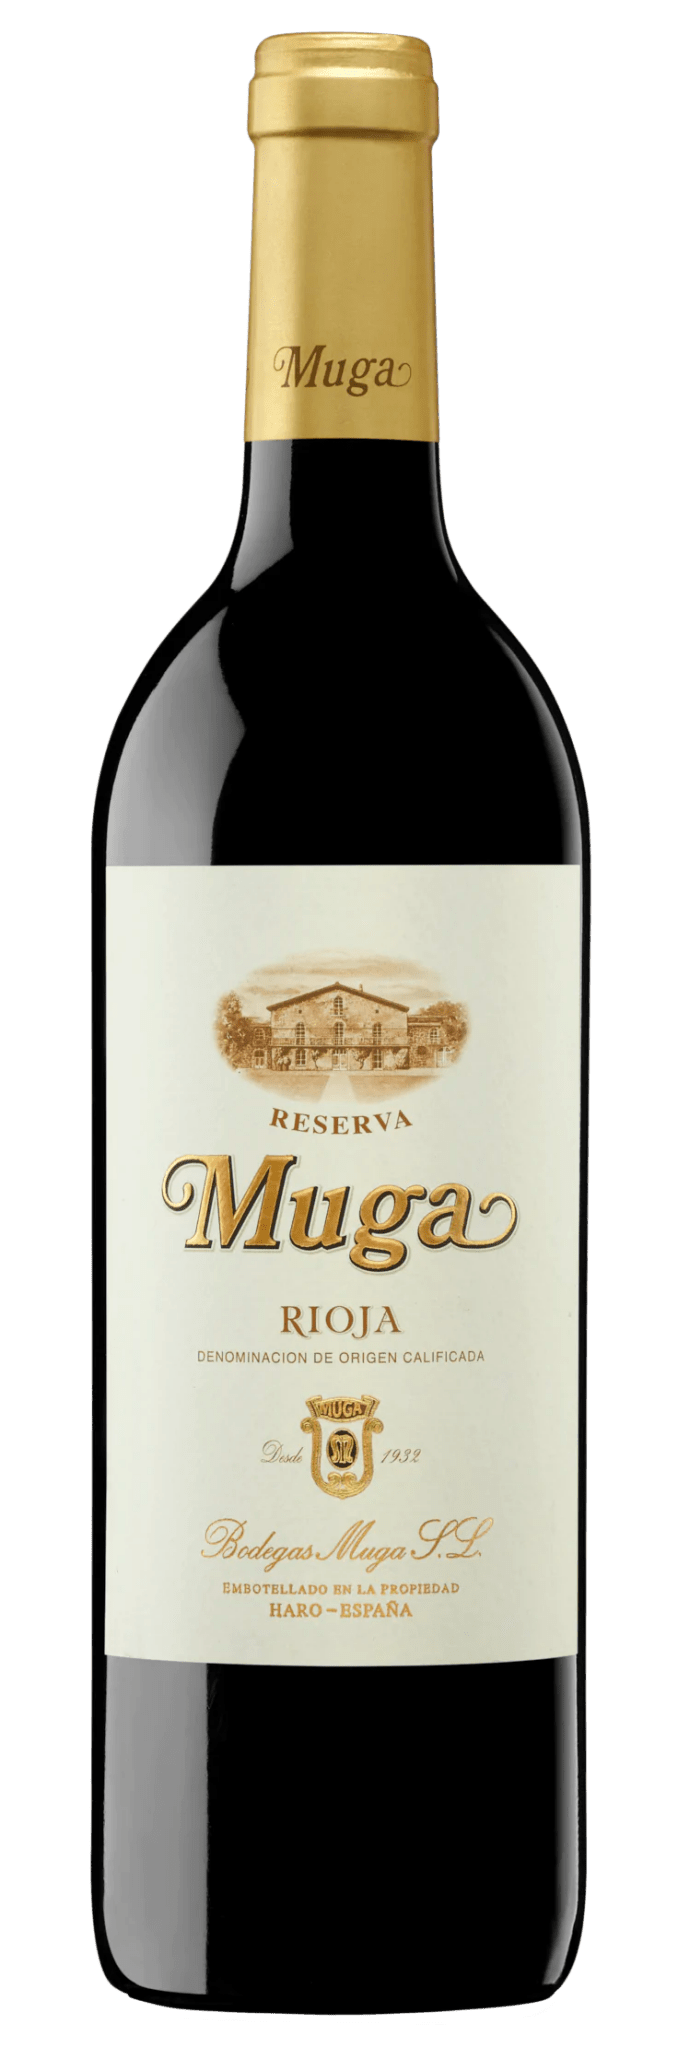 Muga 2019 Reserva Rioja - The Spanish Table